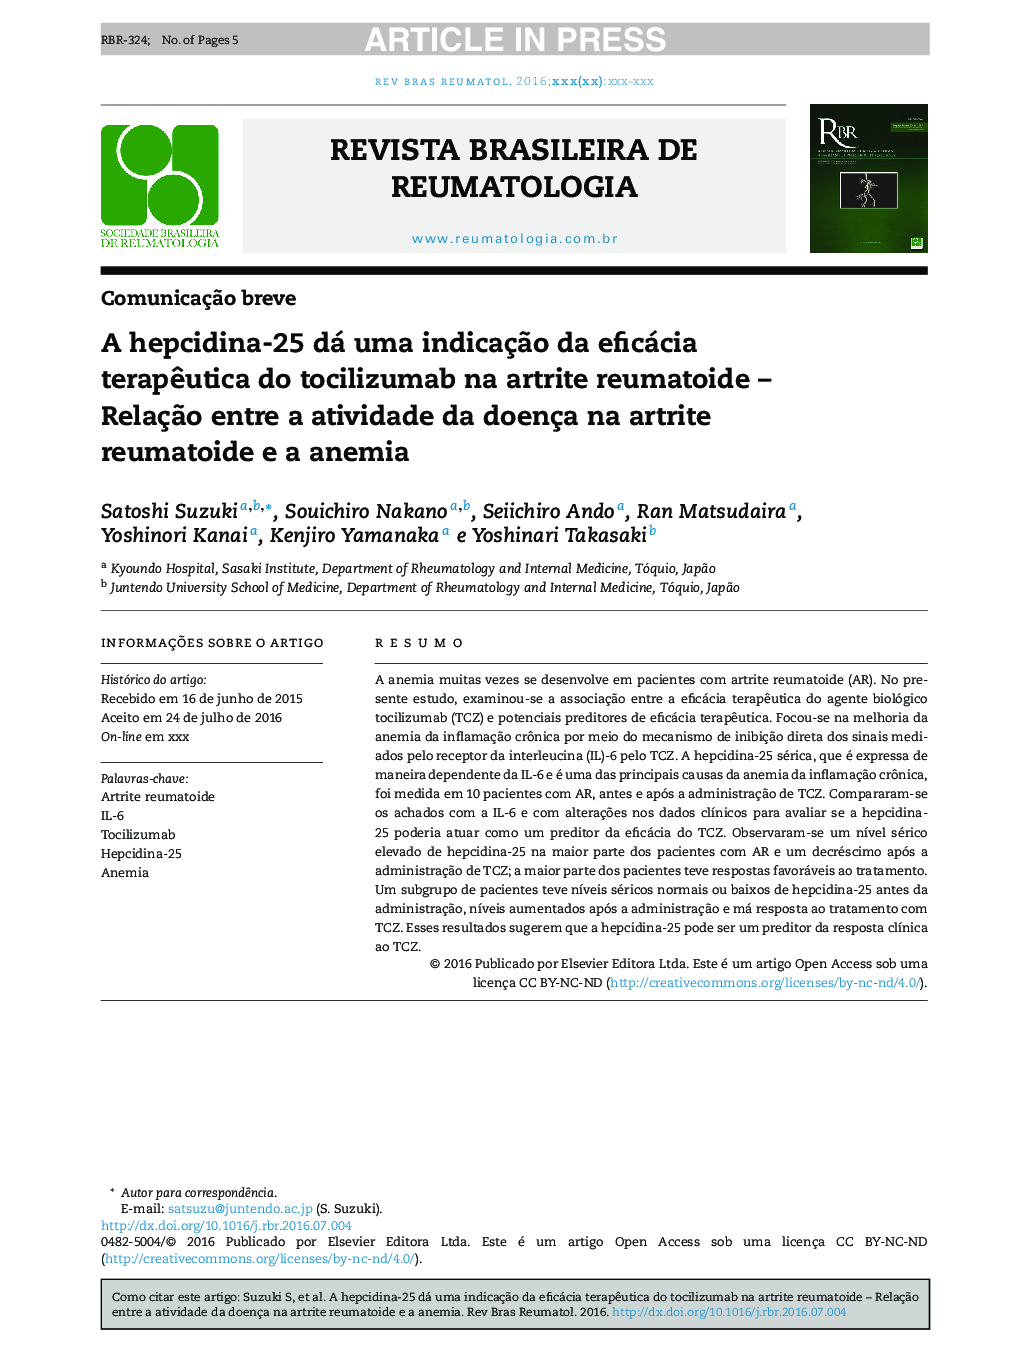 A hepcidinaâ25 dá uma indicaçÃ£o da eficácia terapÃªutica do tocilizumab na artrite reumatoide - RelaçÃ£o entre a atividade da doença na artrite reumatoide e a anemia